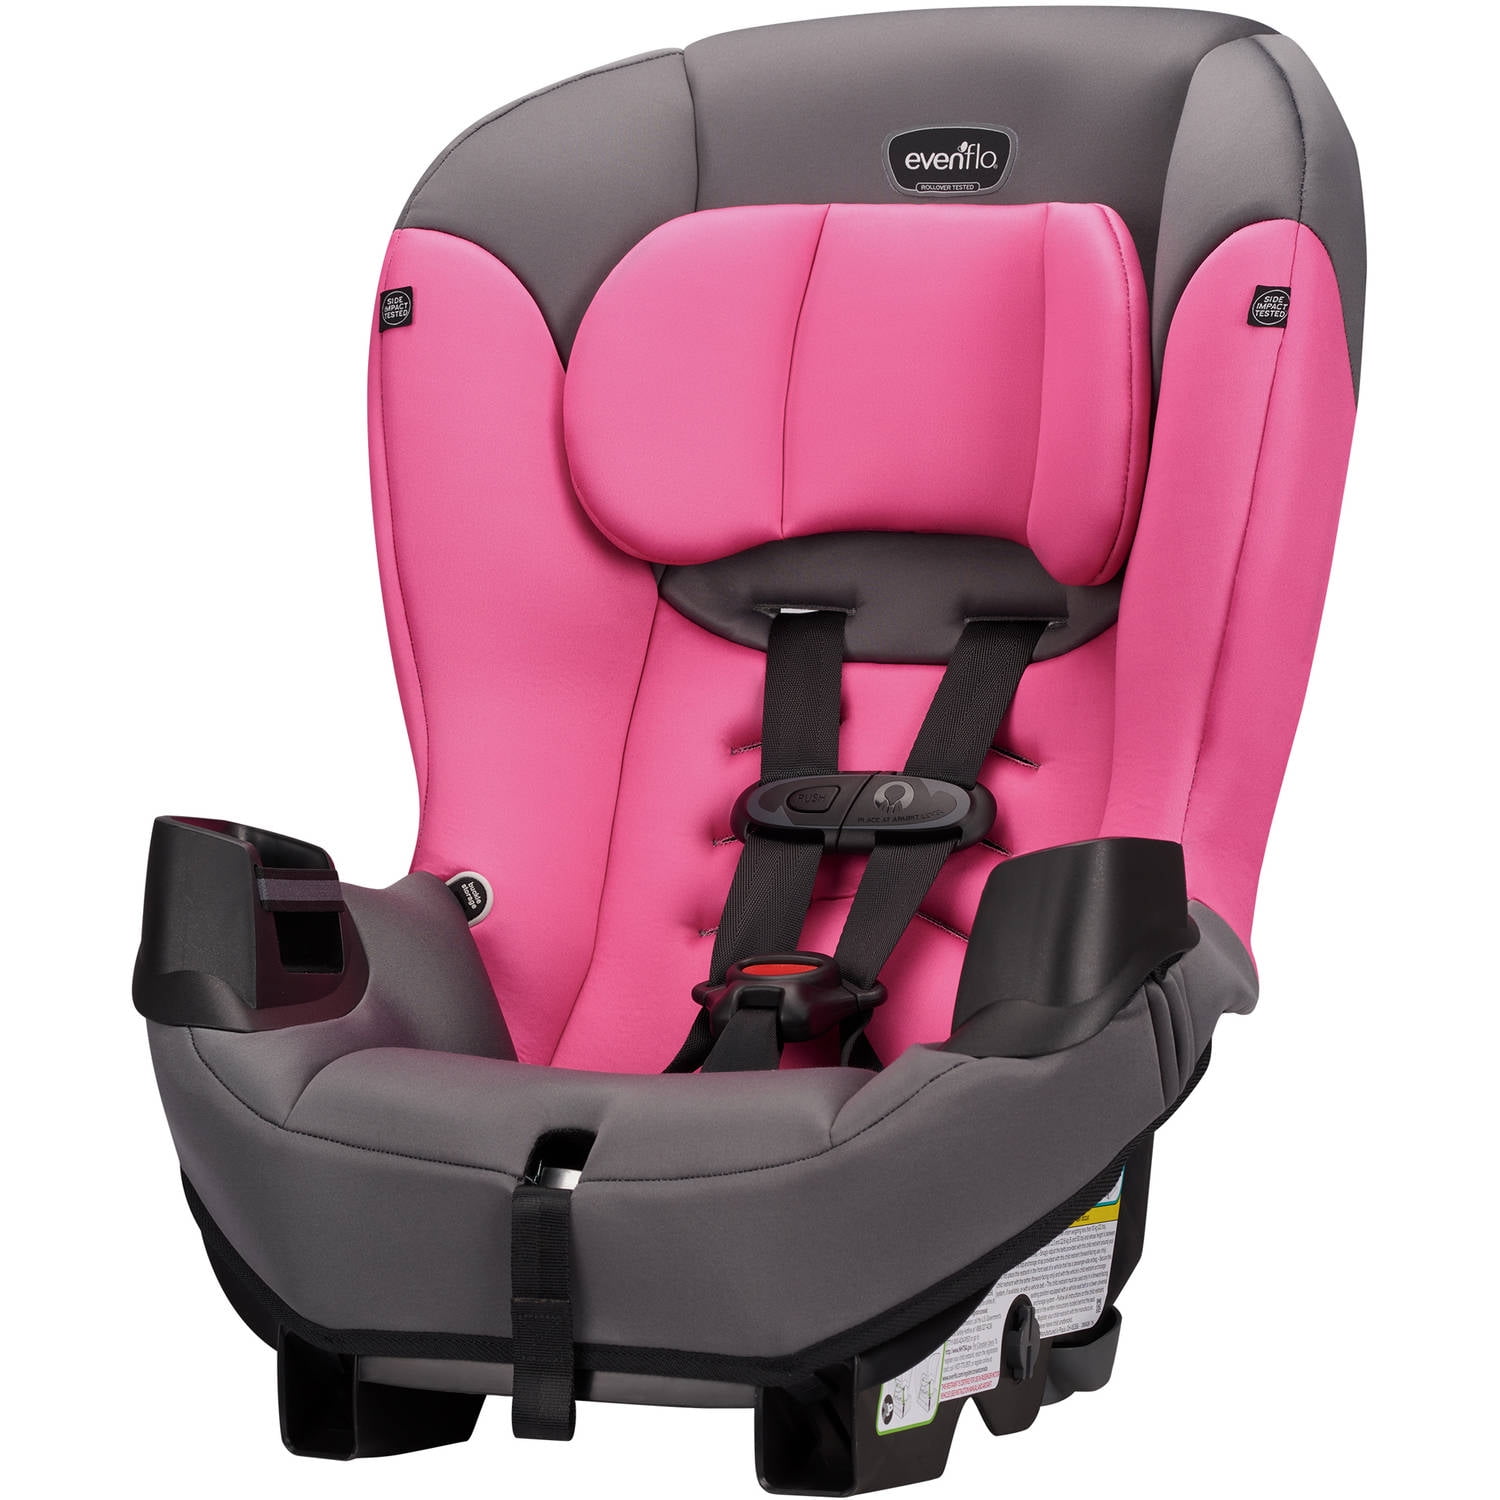 Evenflo Sonus Convertible Car Seat, Strawberry Pink - Walmart.com